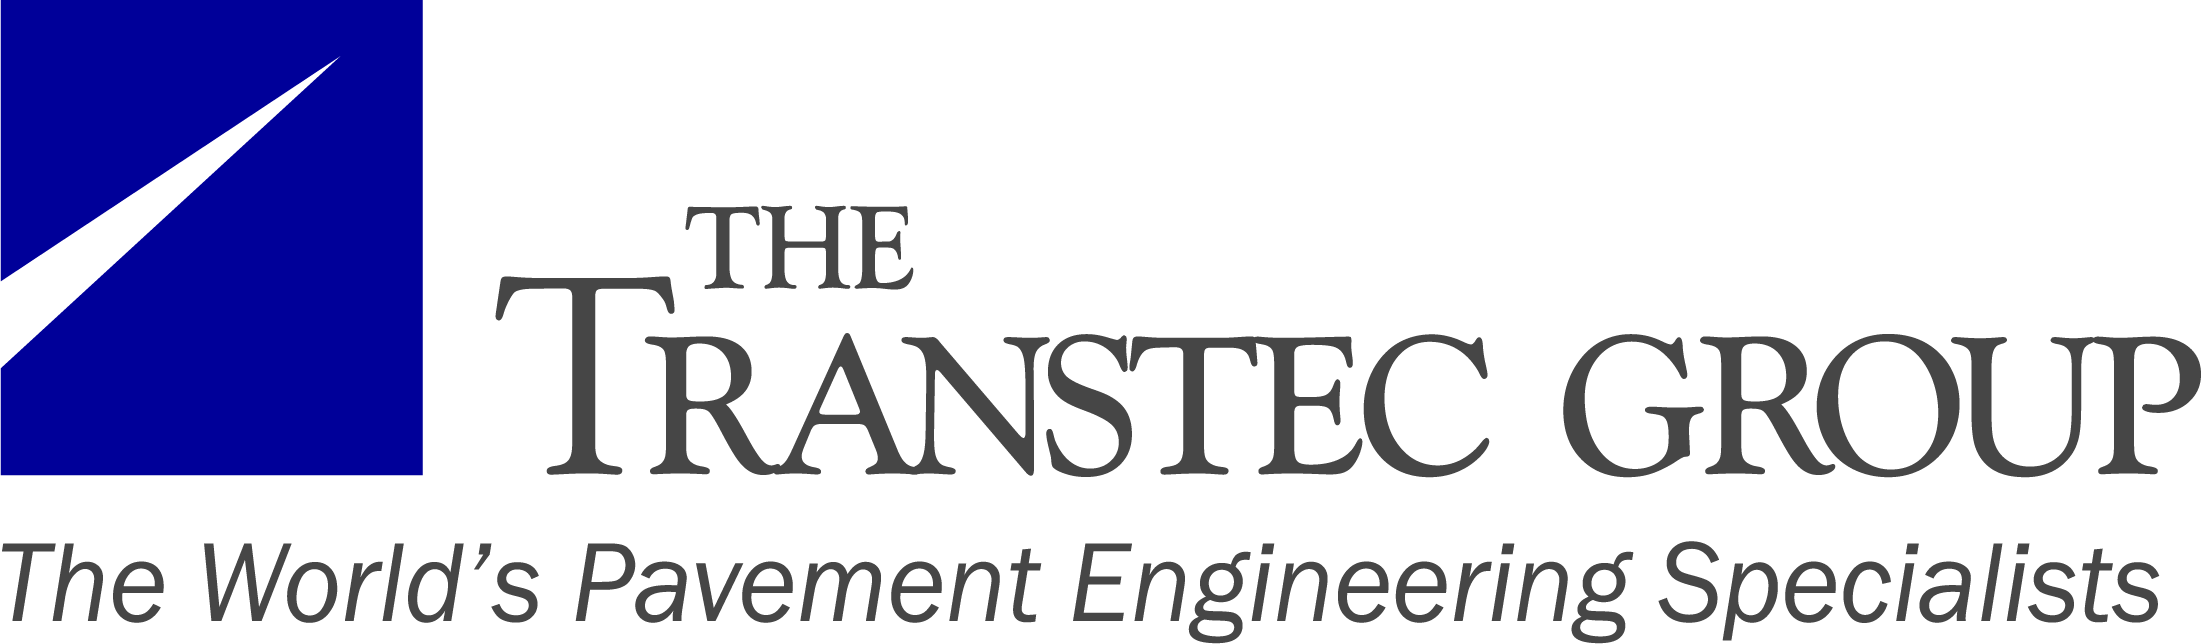 The Transtec Group logo